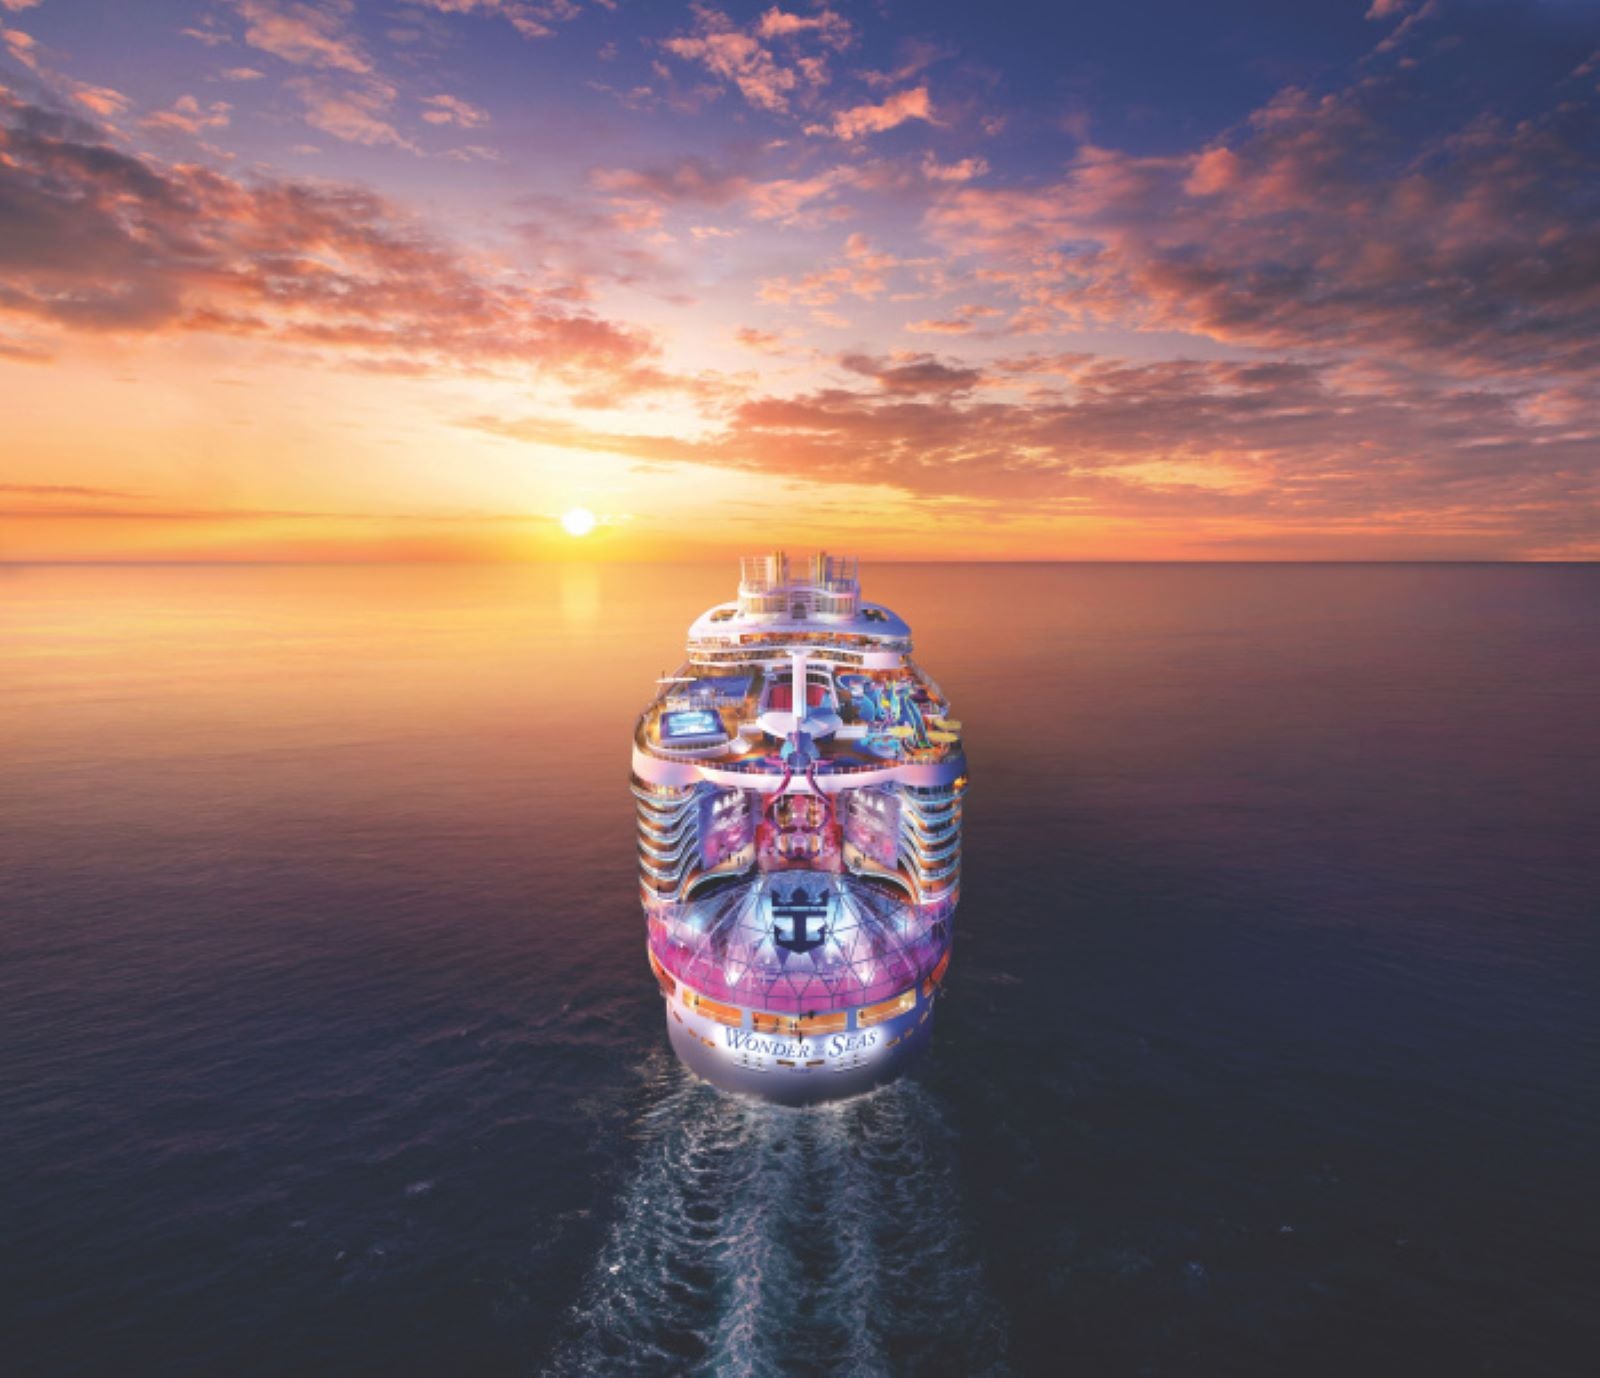 world's largest cruise ship wonder of the seas